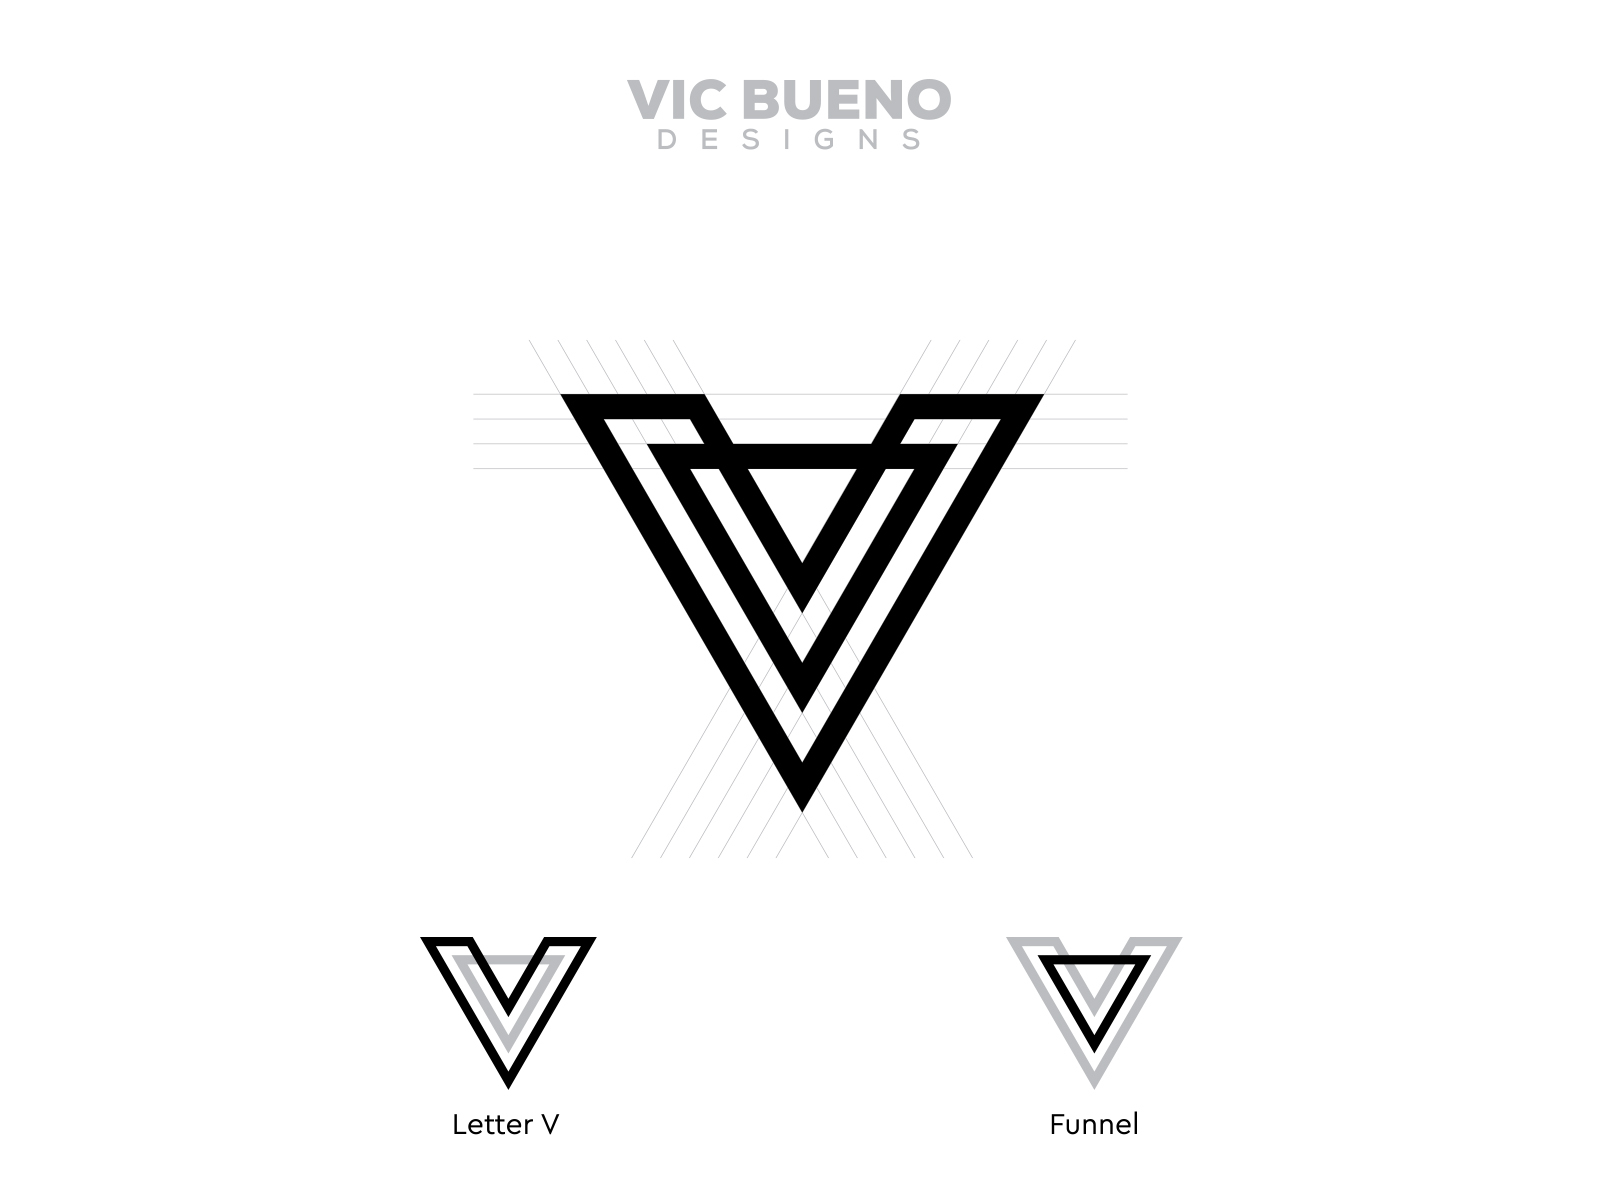 Vic Bueno Designs Logo by Victor Bueno on Dribbble